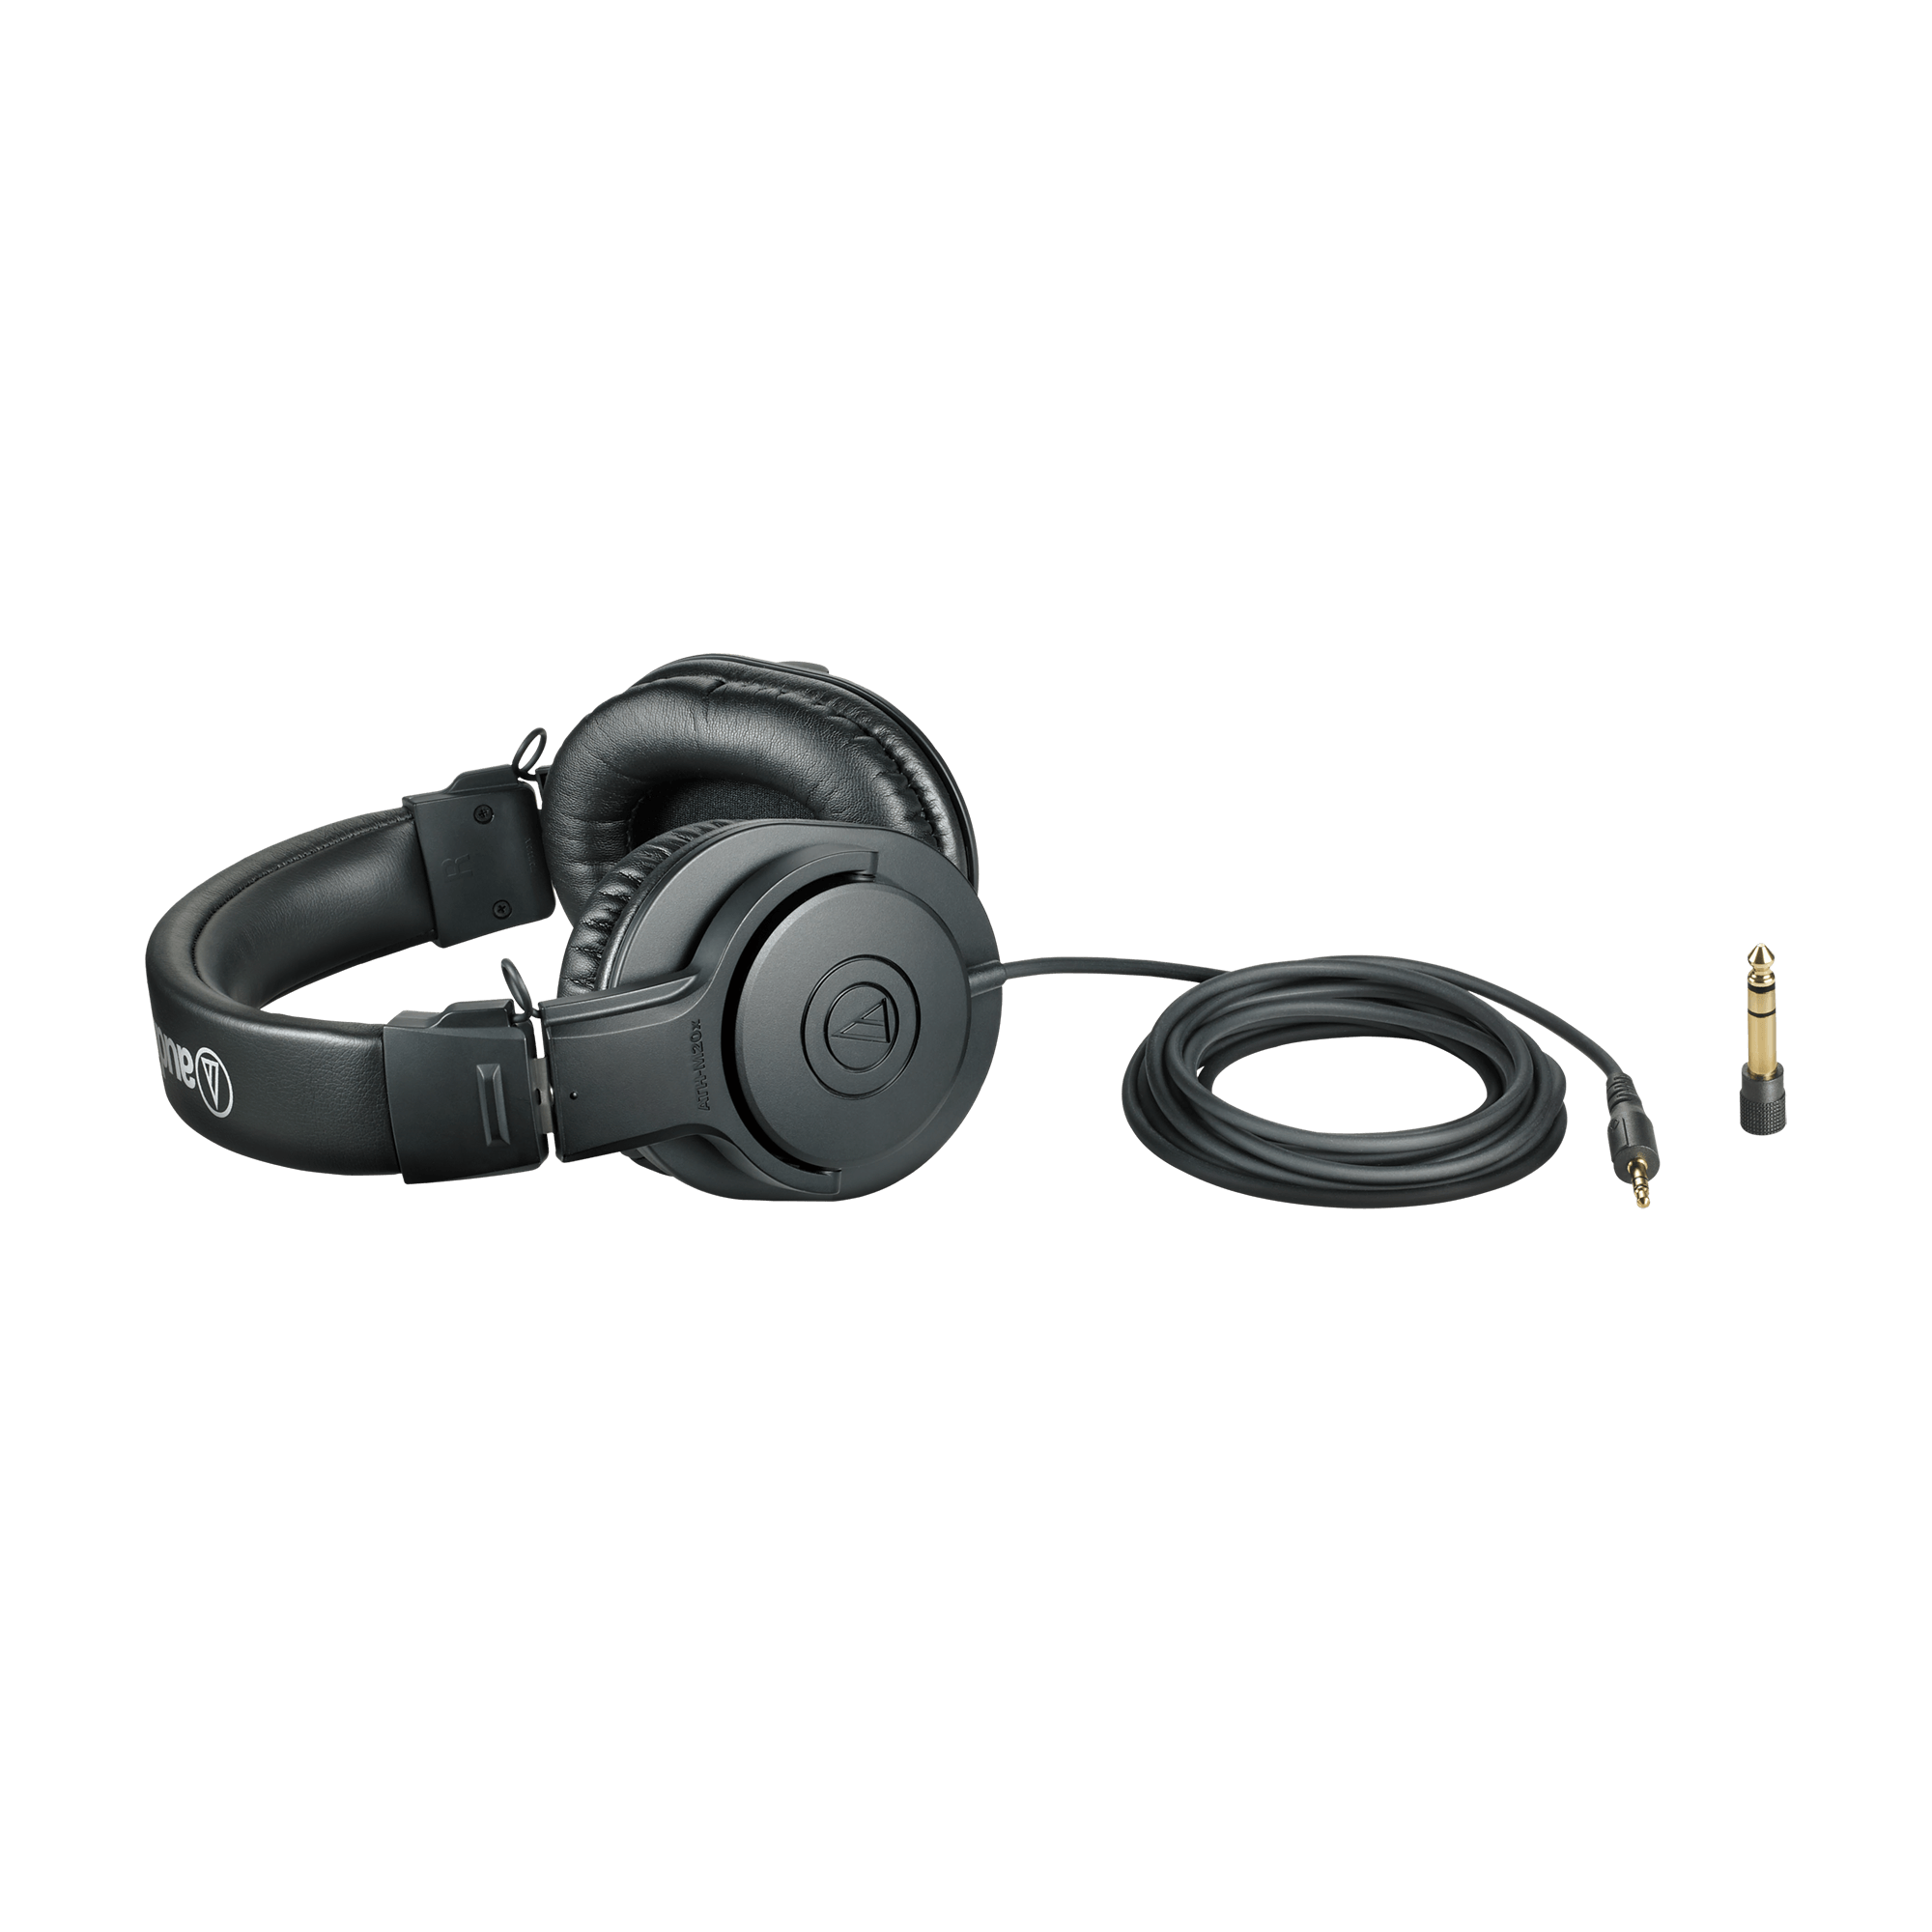  Audio-Technica ATH-M20x Professional Studio Monitor Headphones  Deluxe Bundle : Electronics